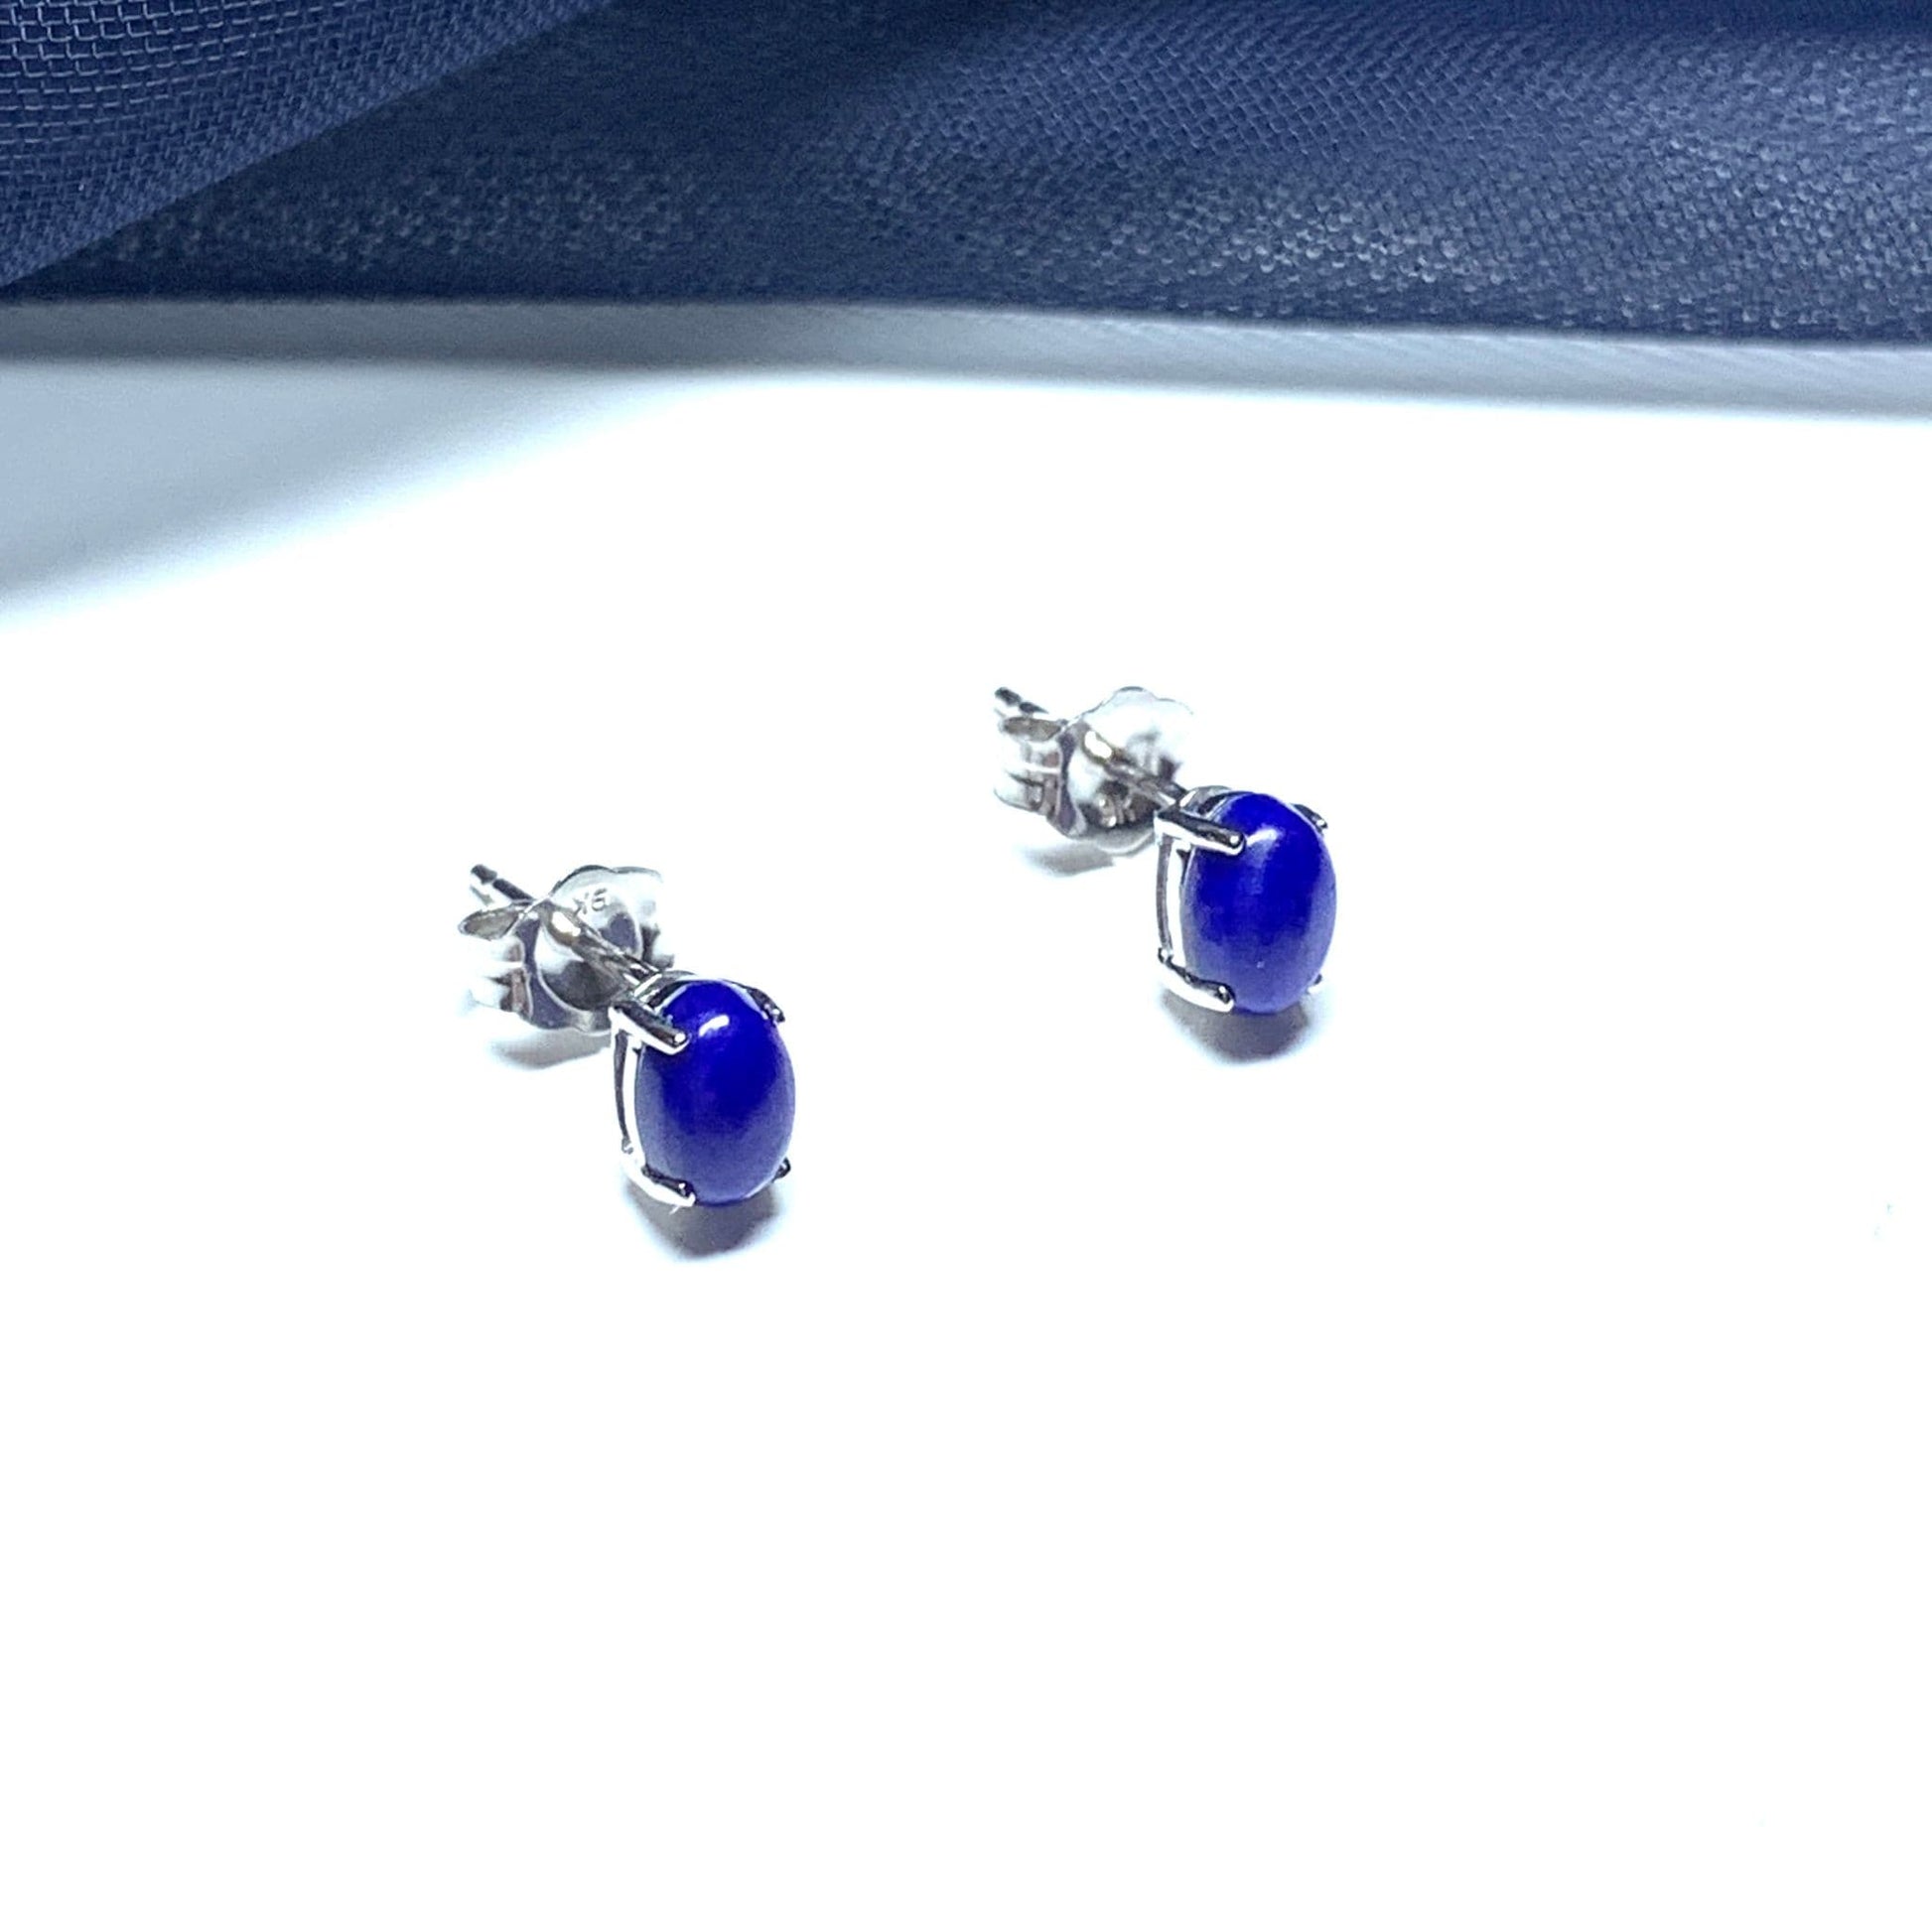 Oval blue lapis lazuli white gold earrings